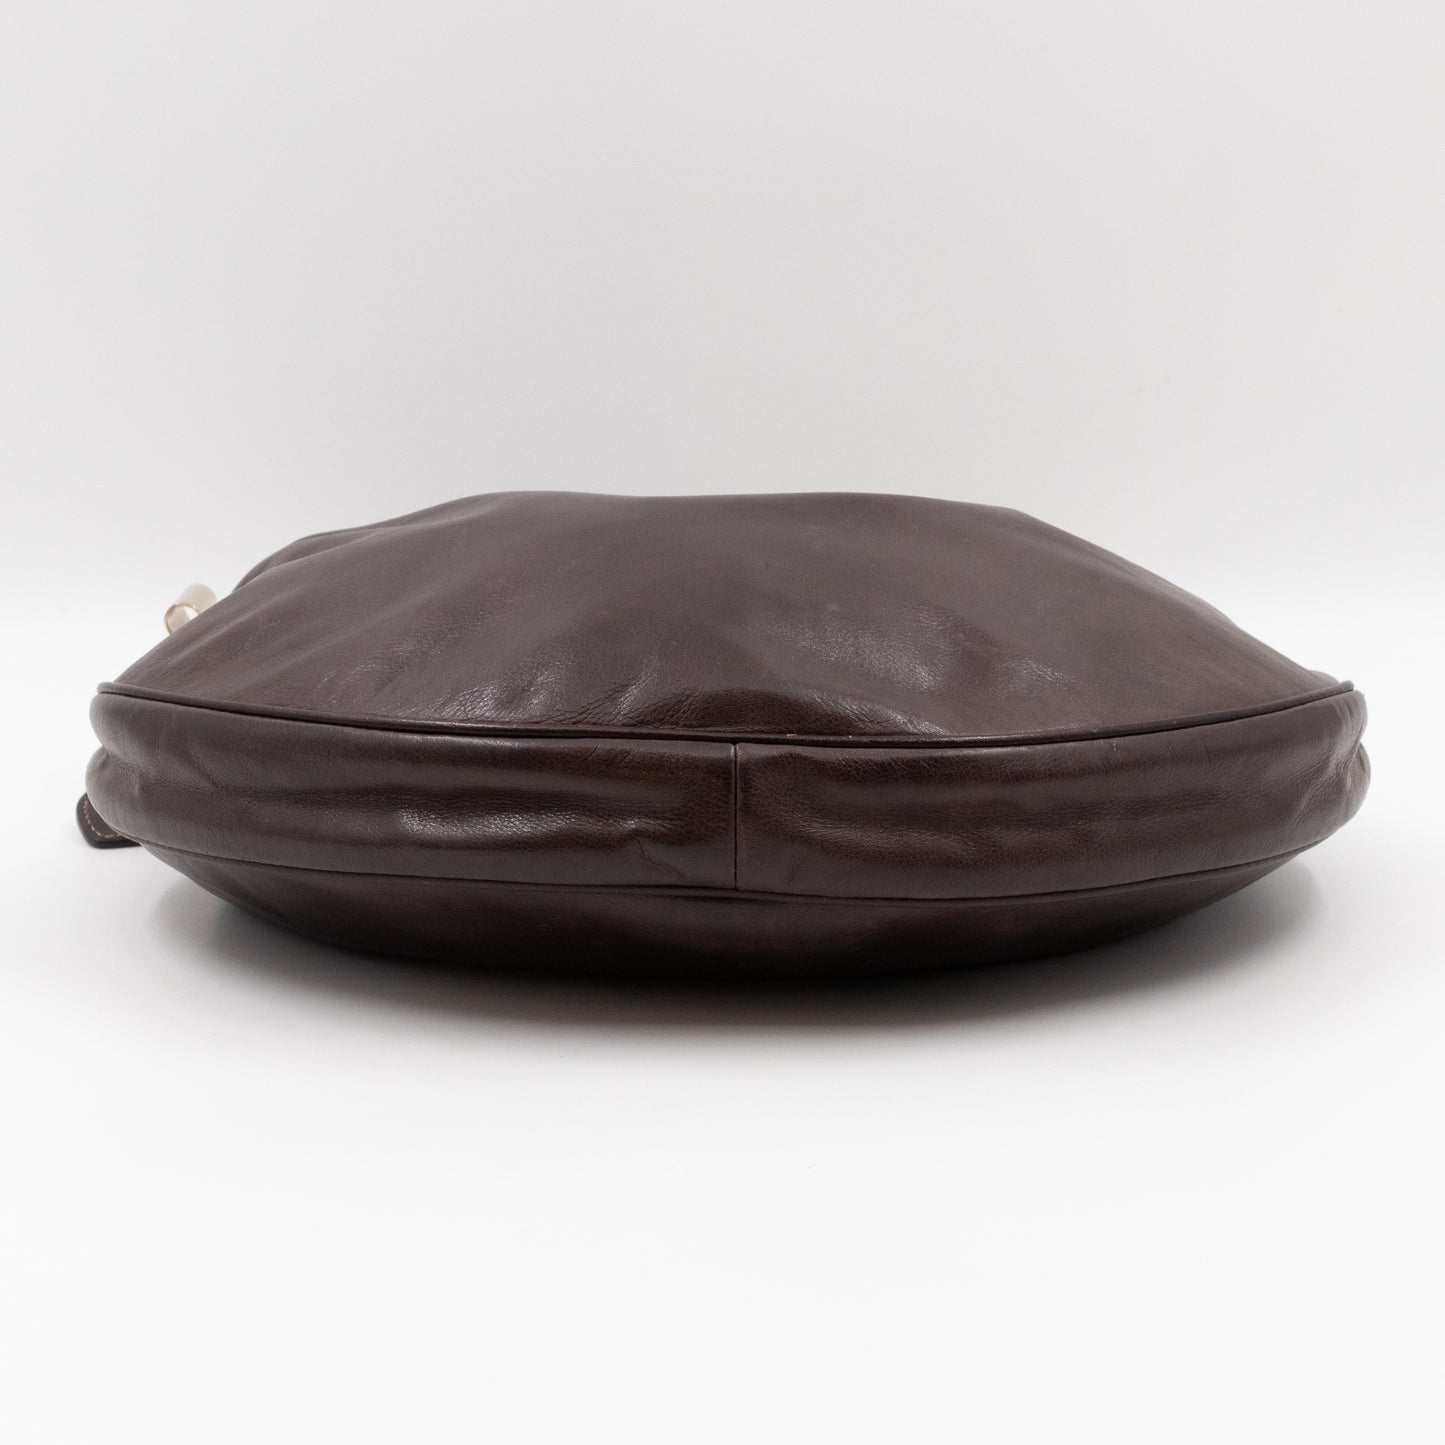 Duchessa Half Moon Hobo Vintage Shoulder Bag Brown Leather